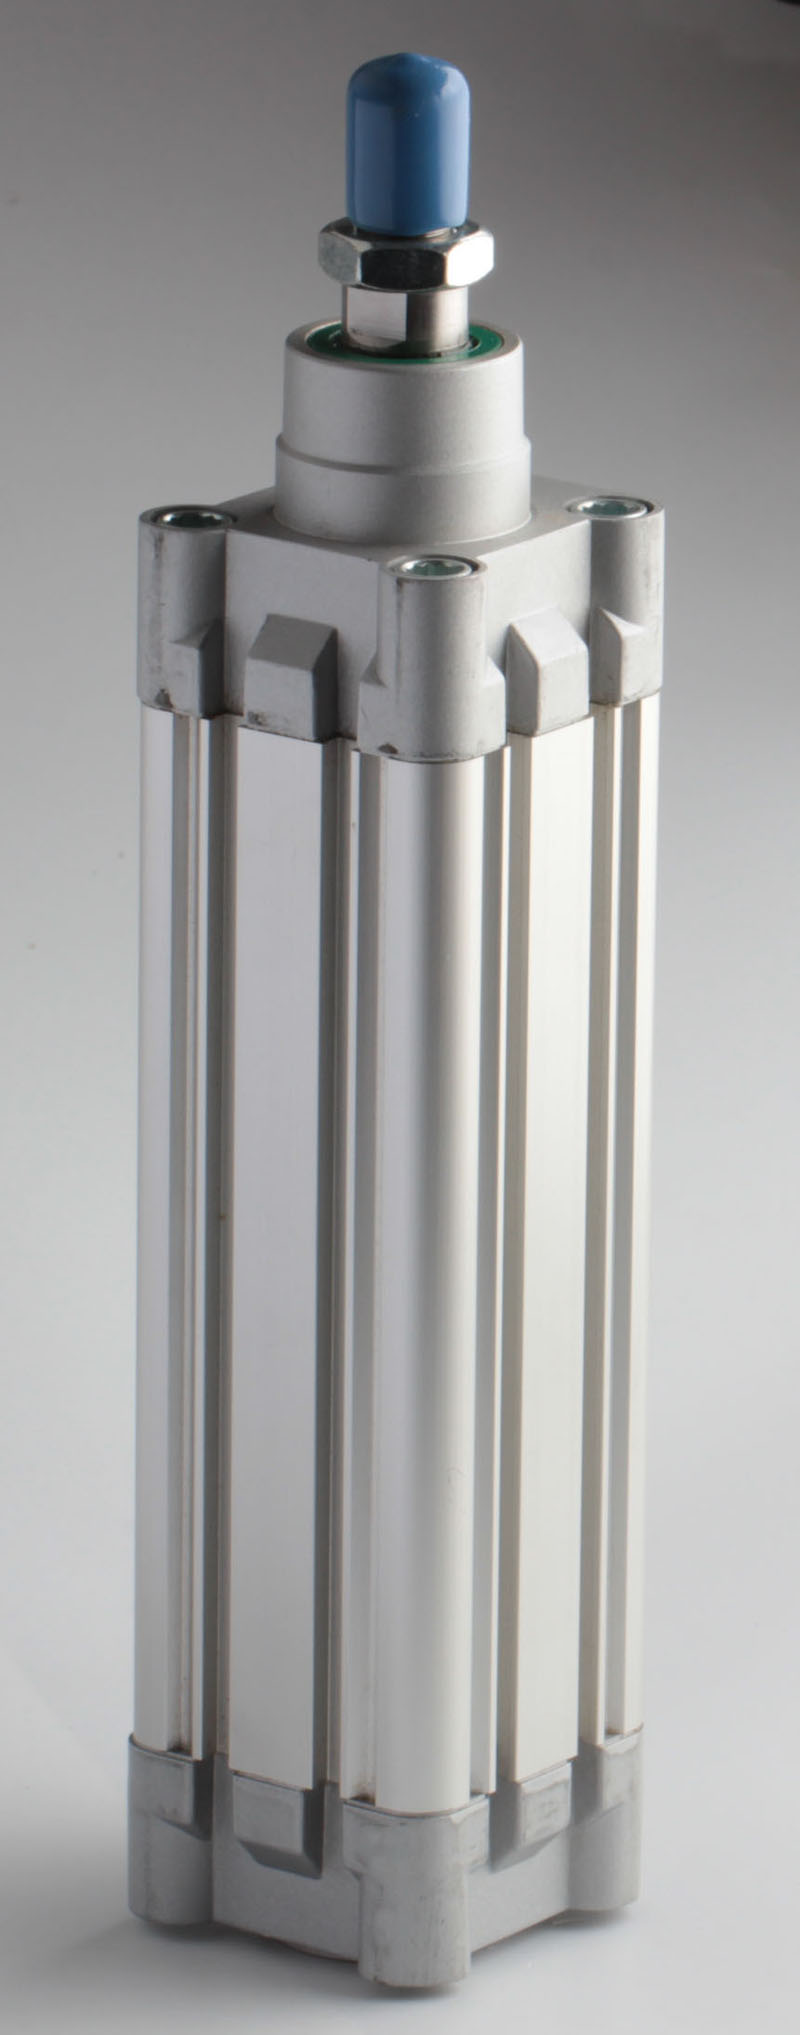 Air Cylinder Kits Professional Manufacturer